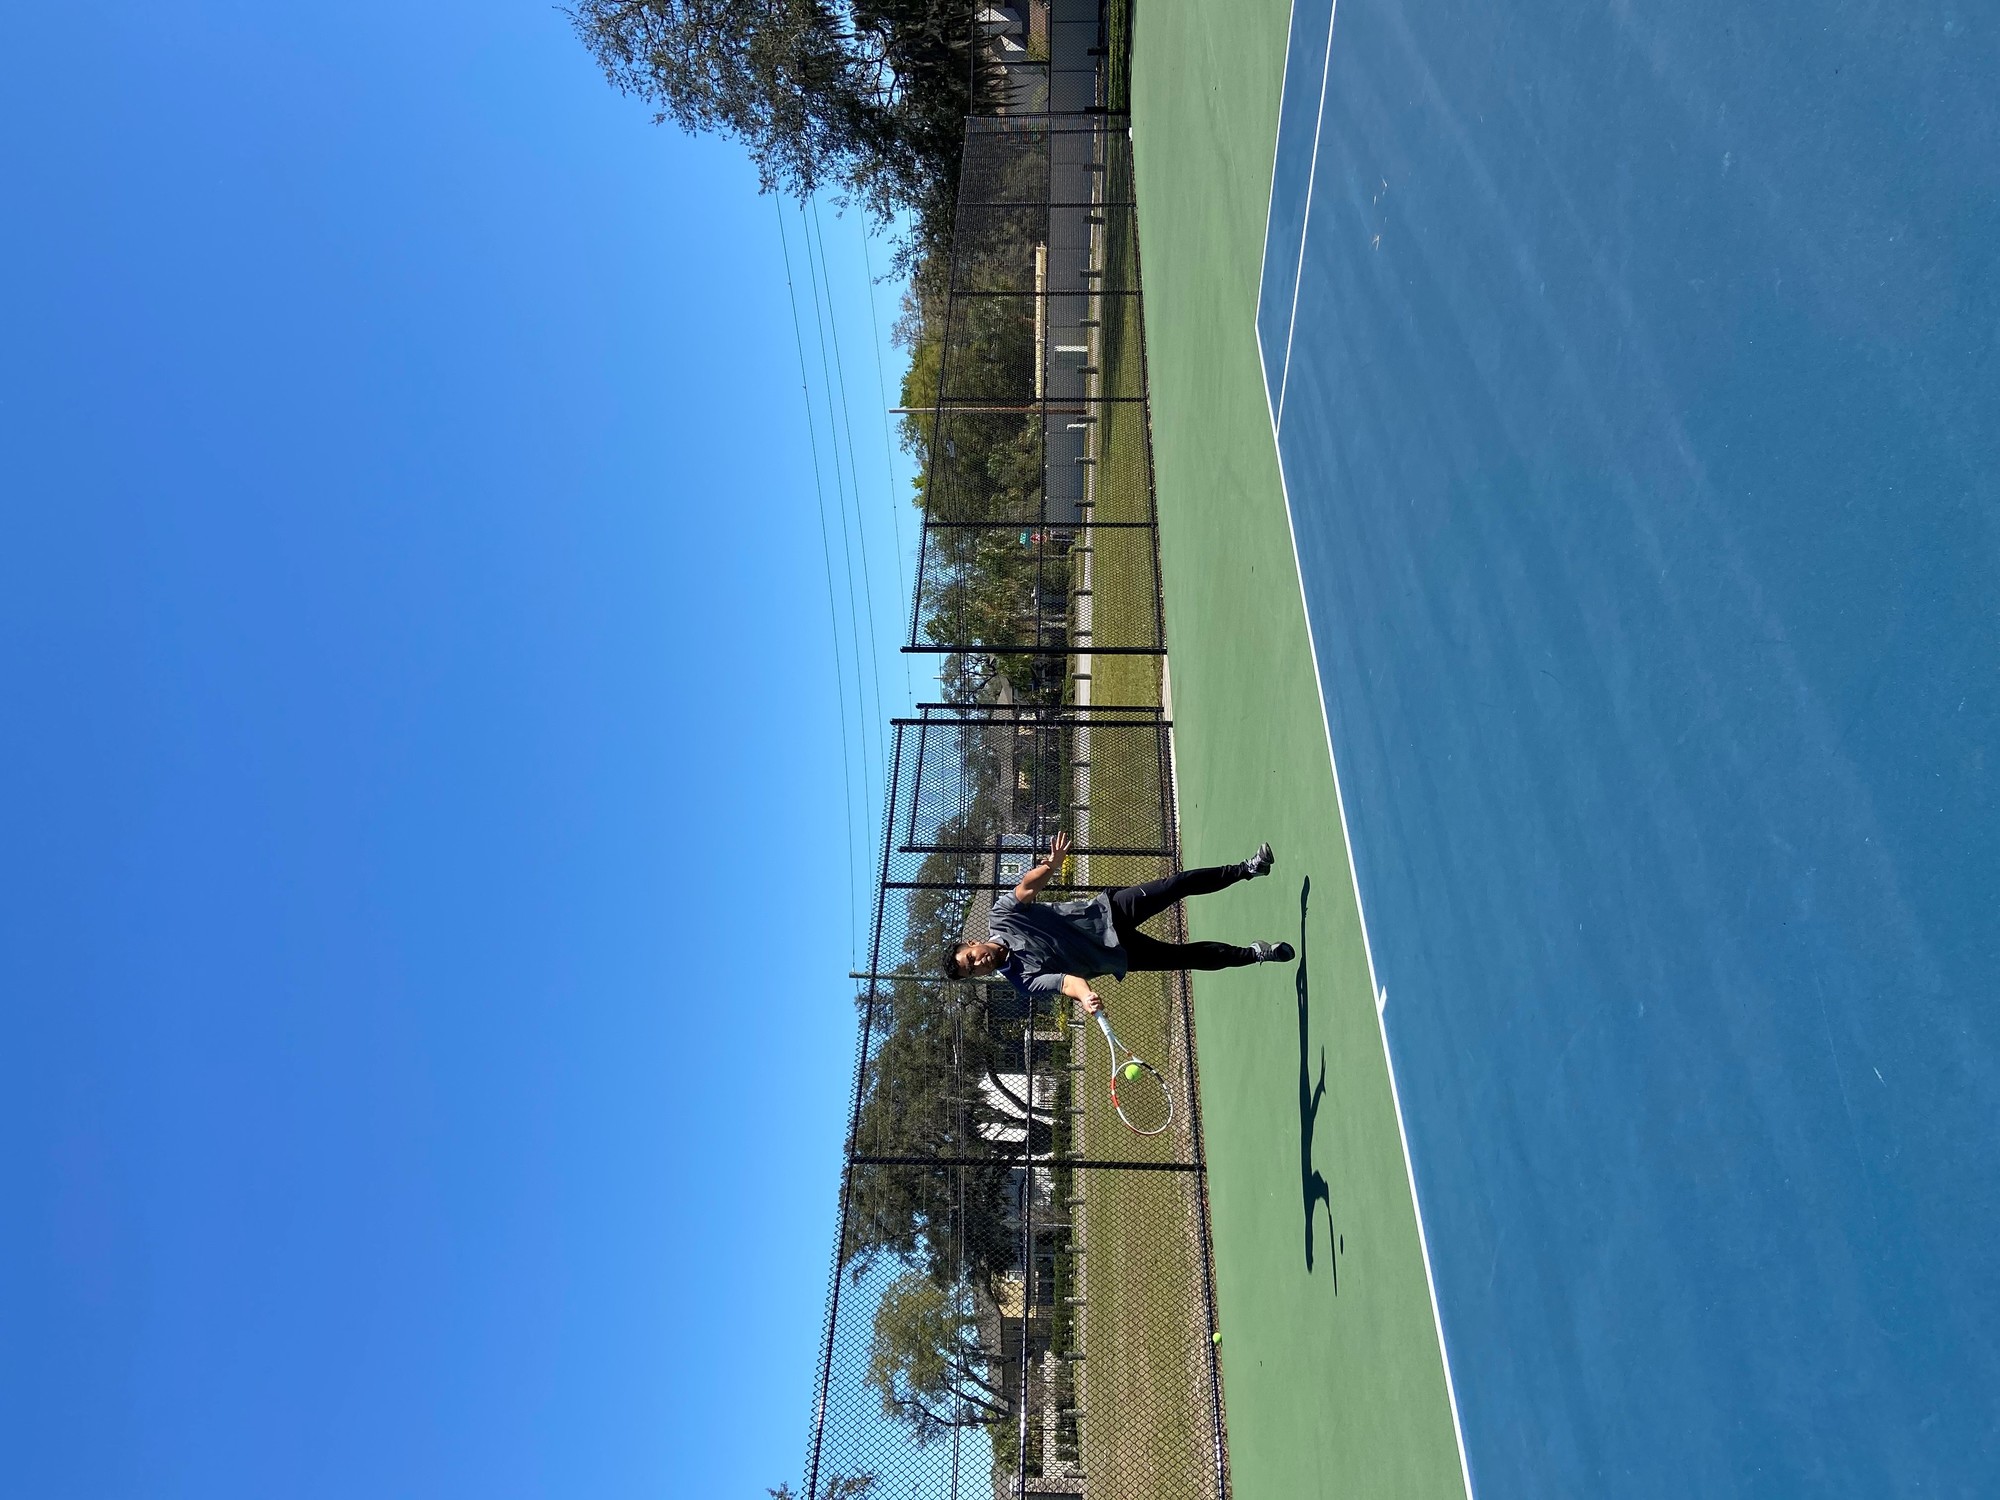 Jaime M. teaches tennis lessons in Wilmington , NC